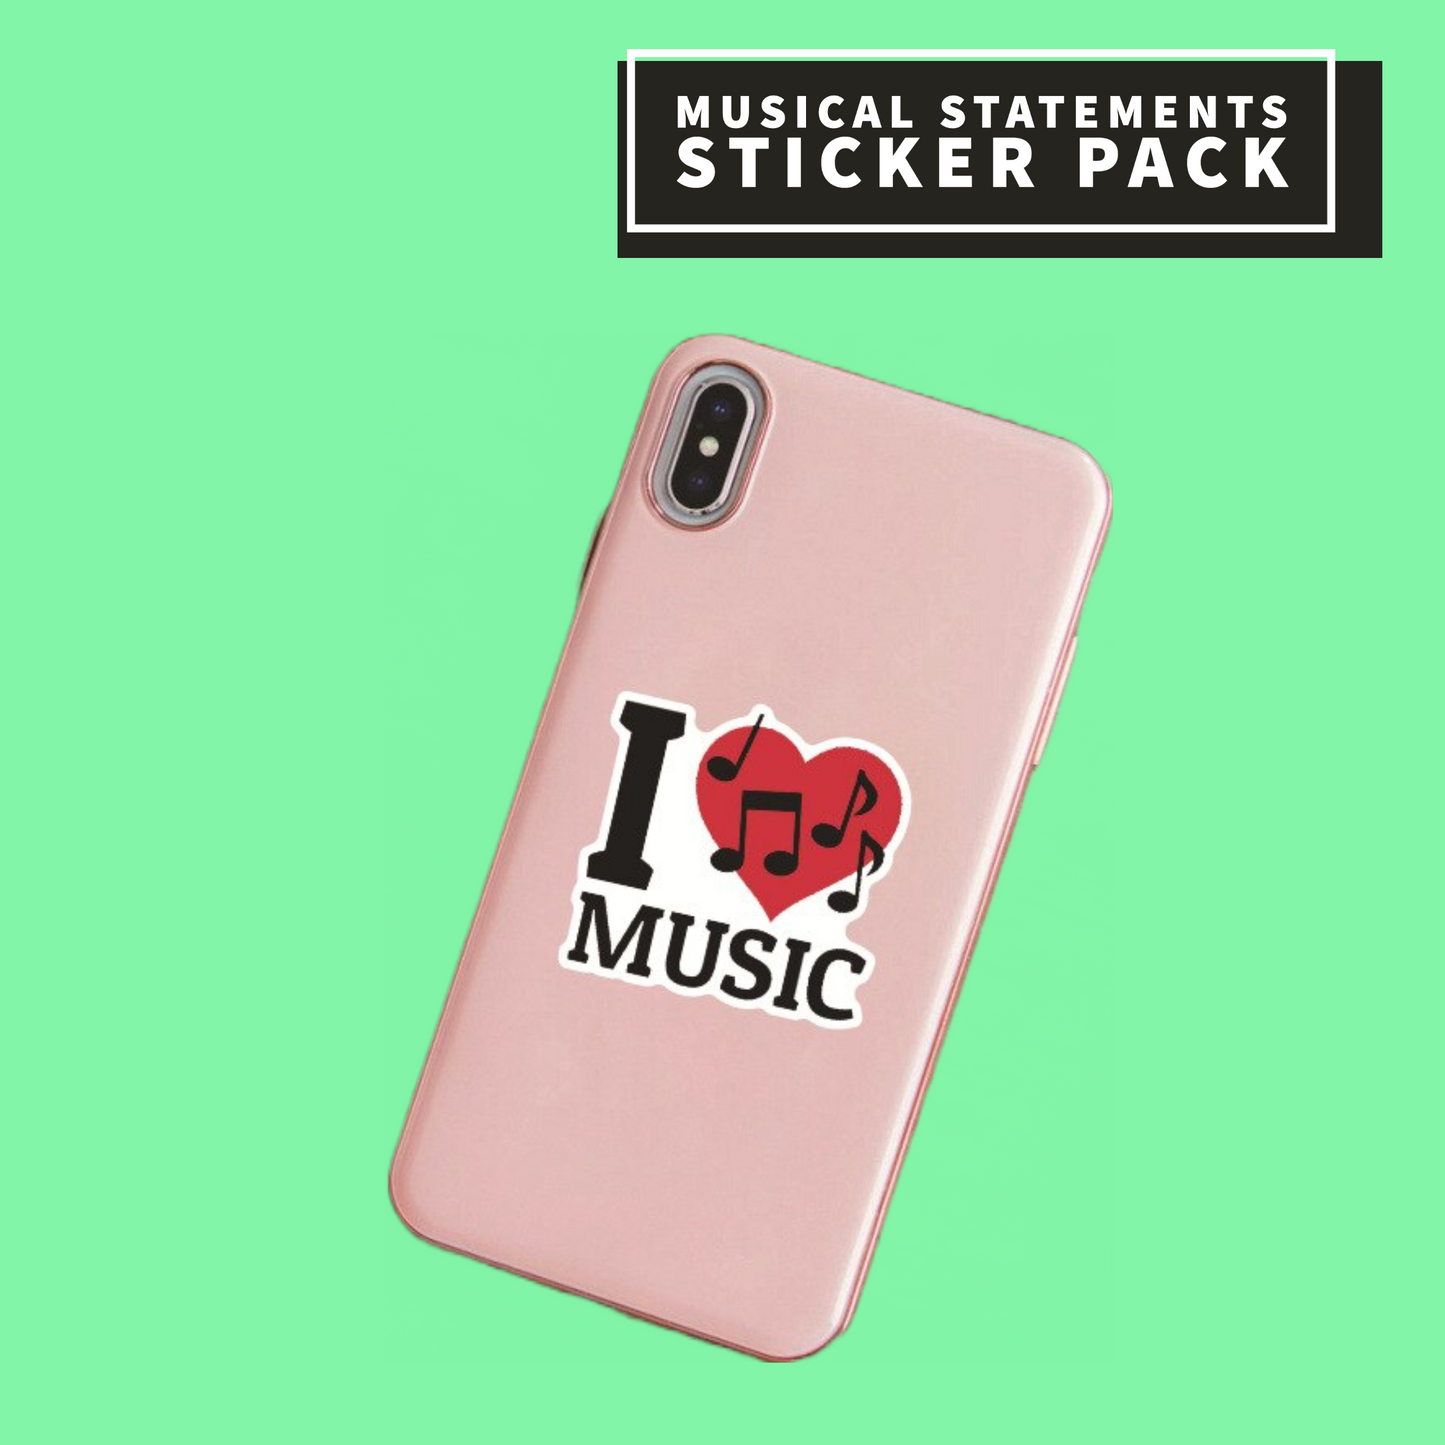 Musical Statements Sticker Pack (20 pieces)